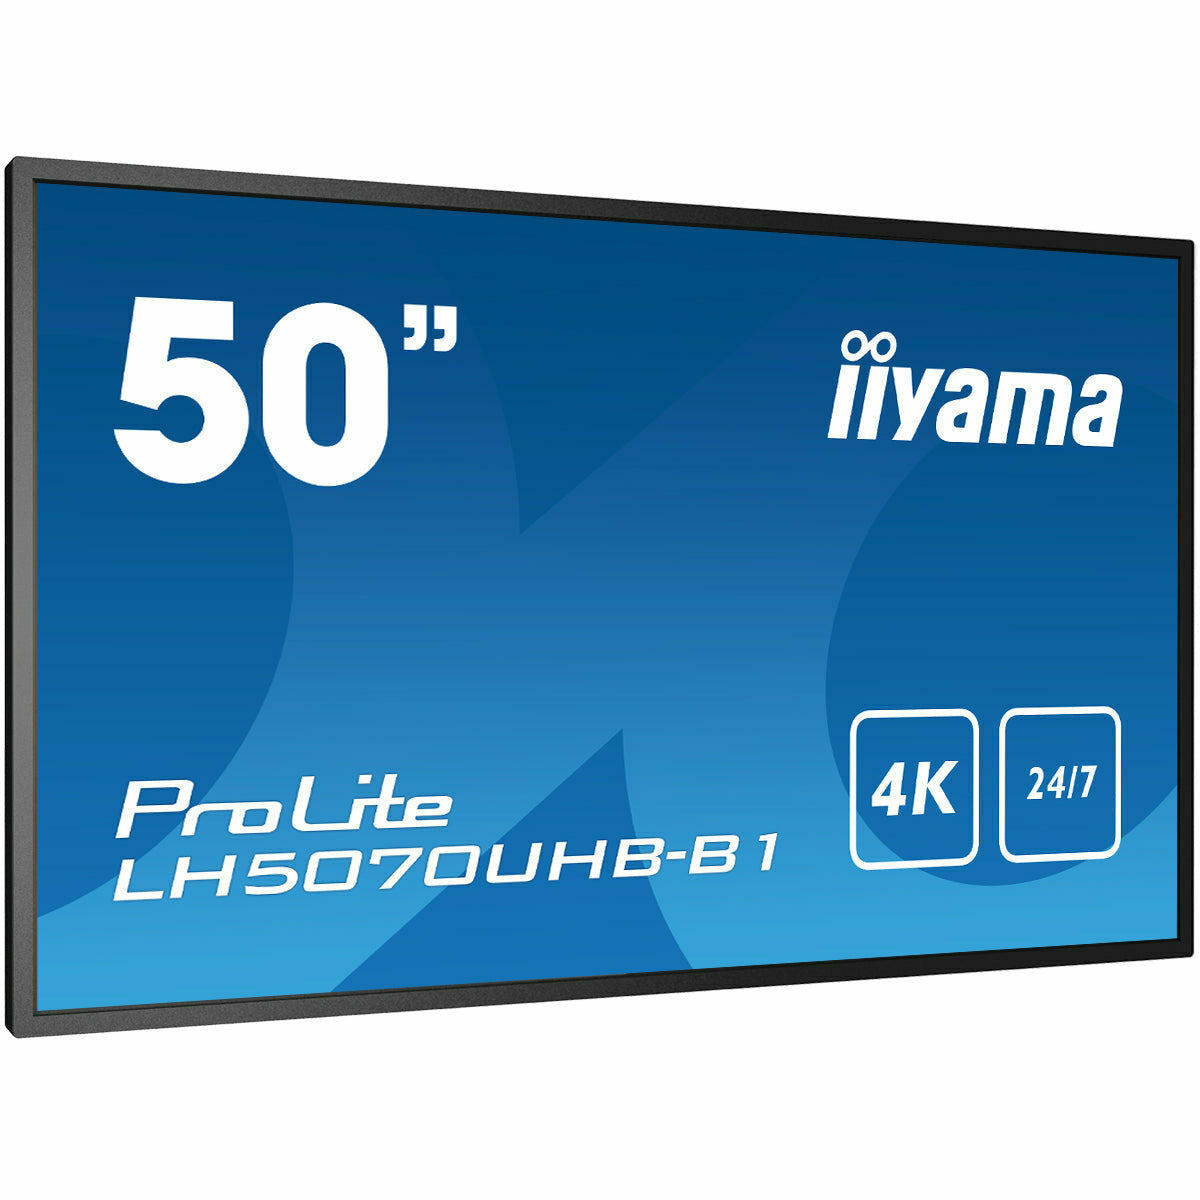 Dark Cyan iiyama ProLite LH5070UHB-B1 50" Large Format Display with 24/7, 4K UHD, Android 9.0 and 700cd/m² High Brightness